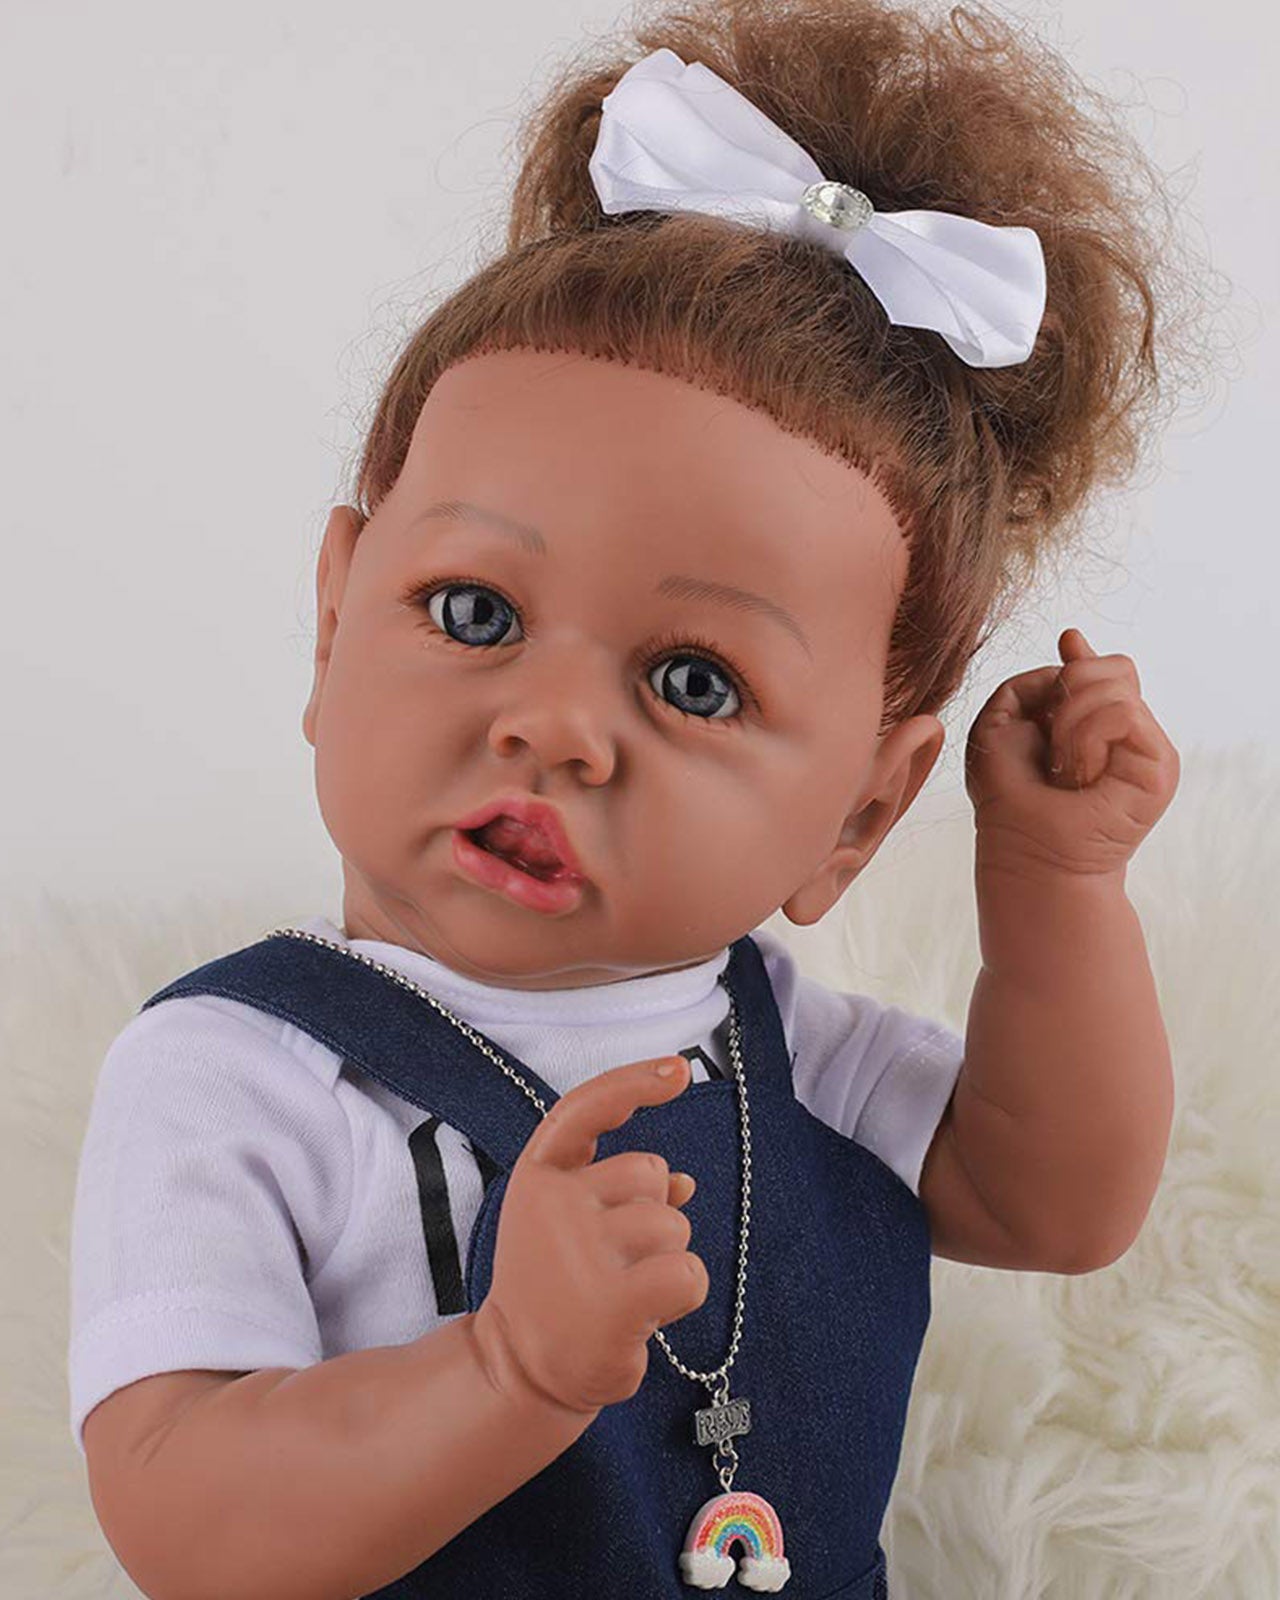 Zara - 20" Reborn Baby Dolls Cute African American Newborn Girl with Sweet Touch